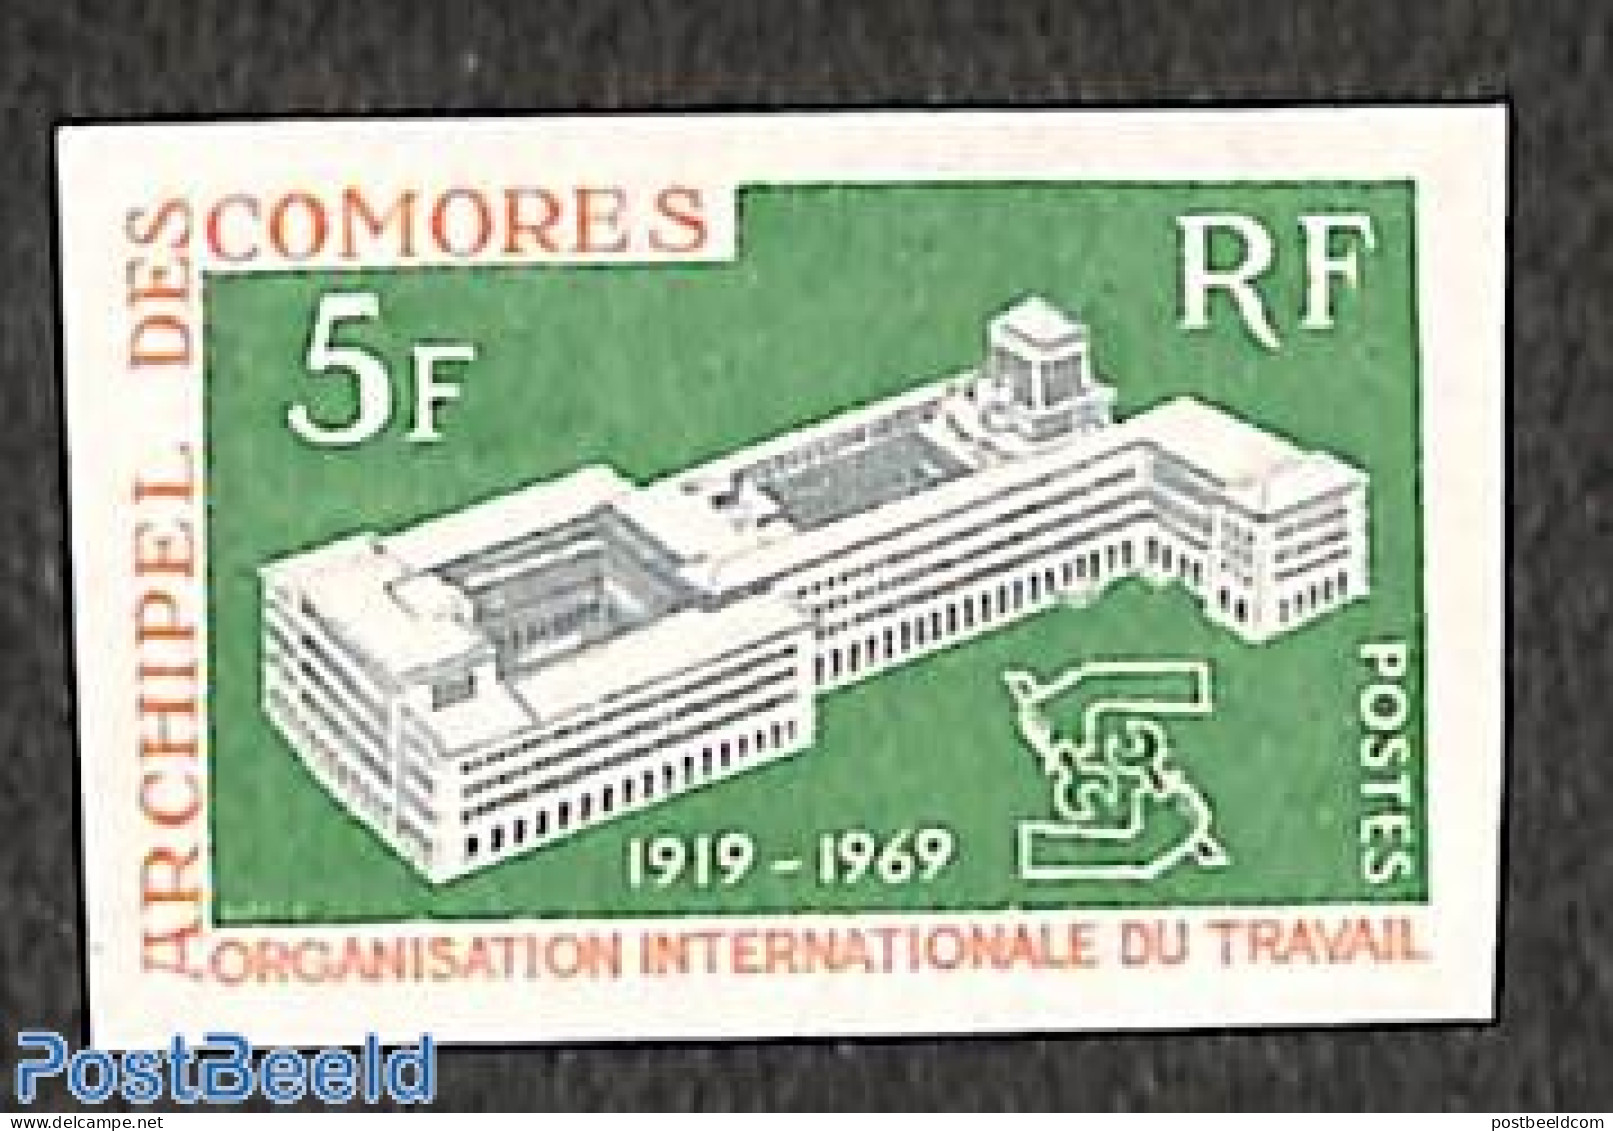 Comoros 1969 I.L.O. Anniv 1v Imperforated, Mint NH, History - Comores (1975-...)